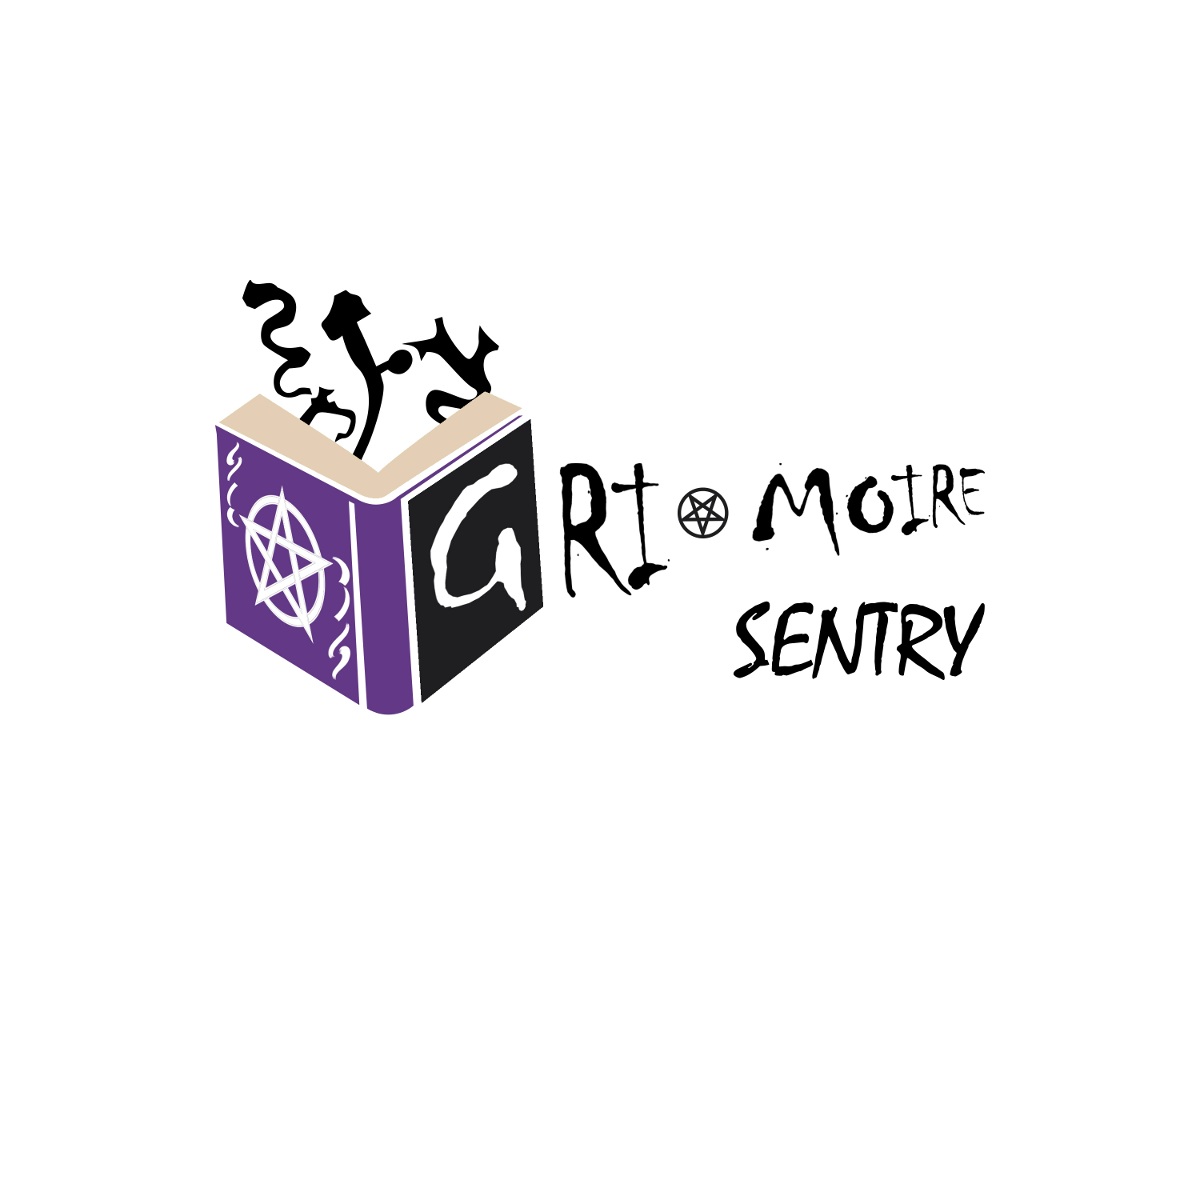 Grimoire sentry for Sale!